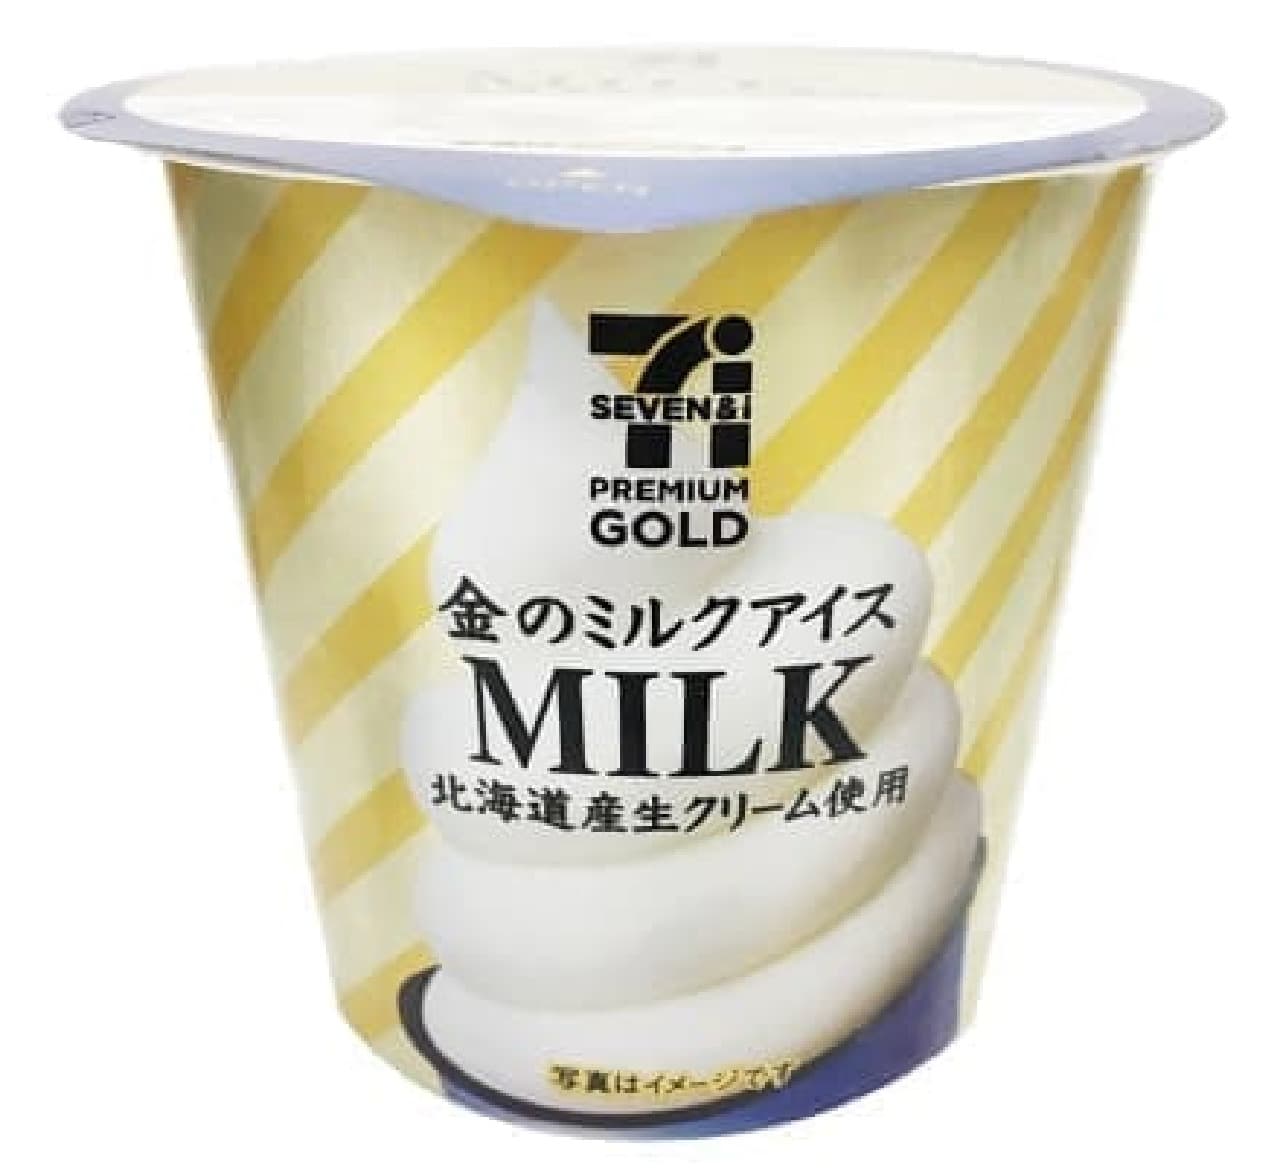 7-ELEVEN Premium Gold Gold Milk Ice